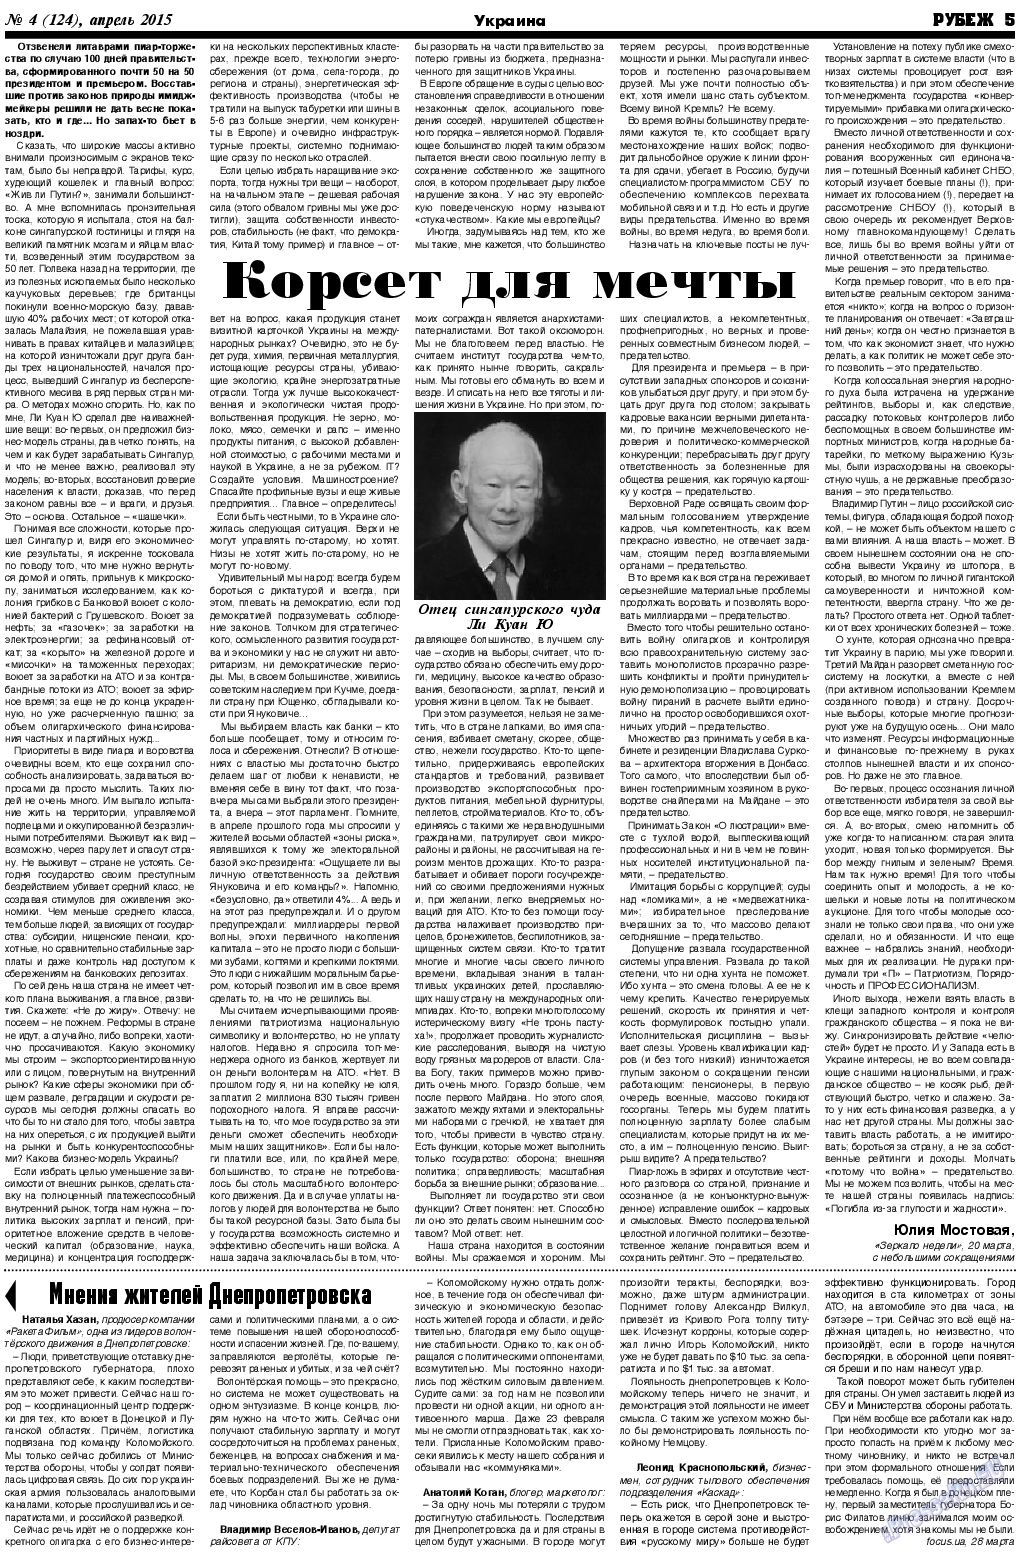 Рубеж, газета. 2015 №4 стр.5